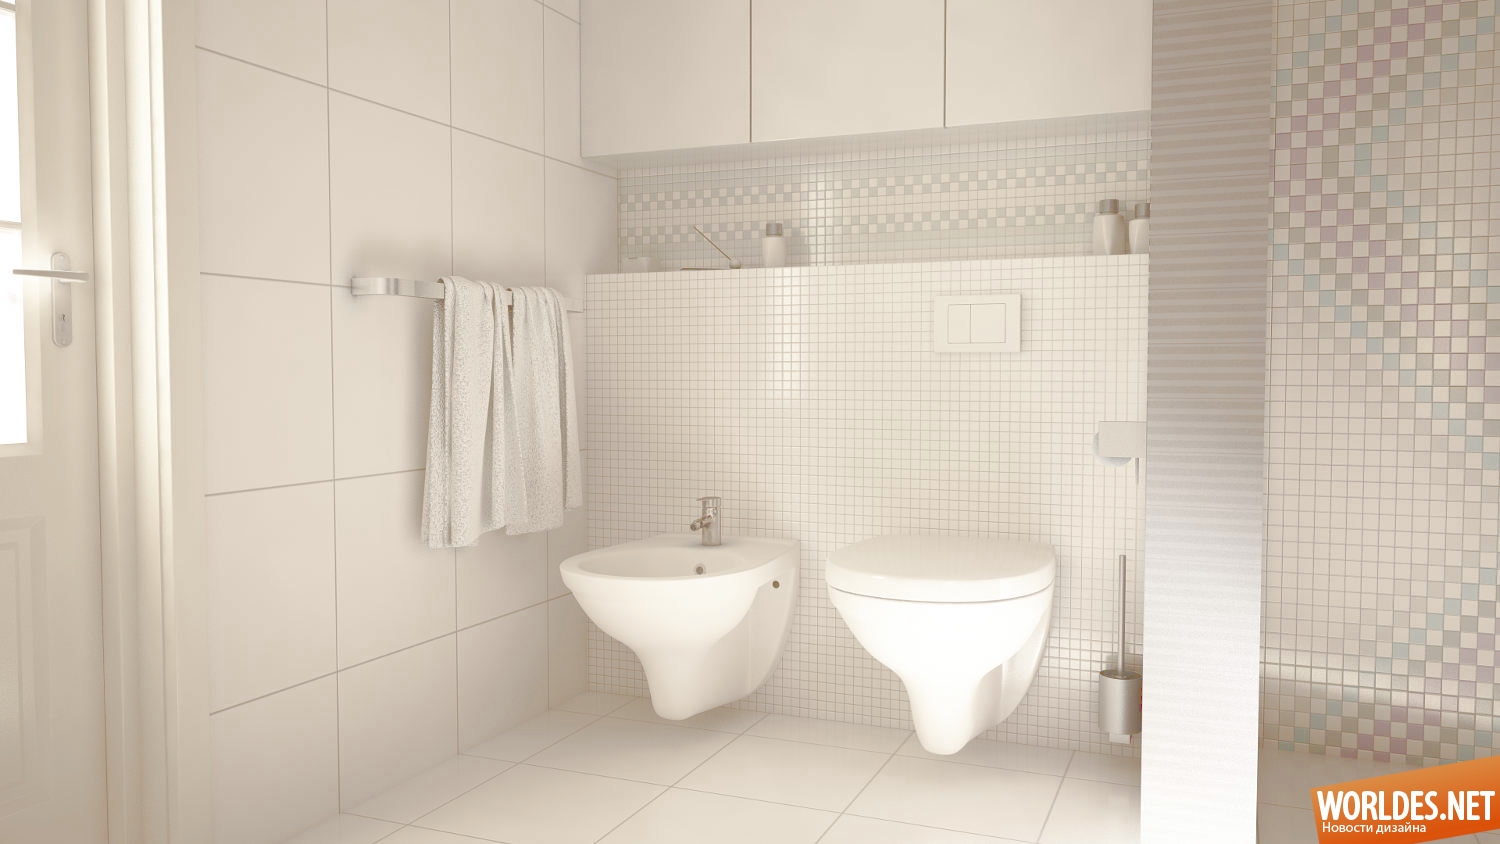 ванные комнаты, белые ванные комнаты, ванные комнаты фото, ванные комнаты в белом цвете, дизайн белых ванных комнат, дизайн белых ванных комнат фото